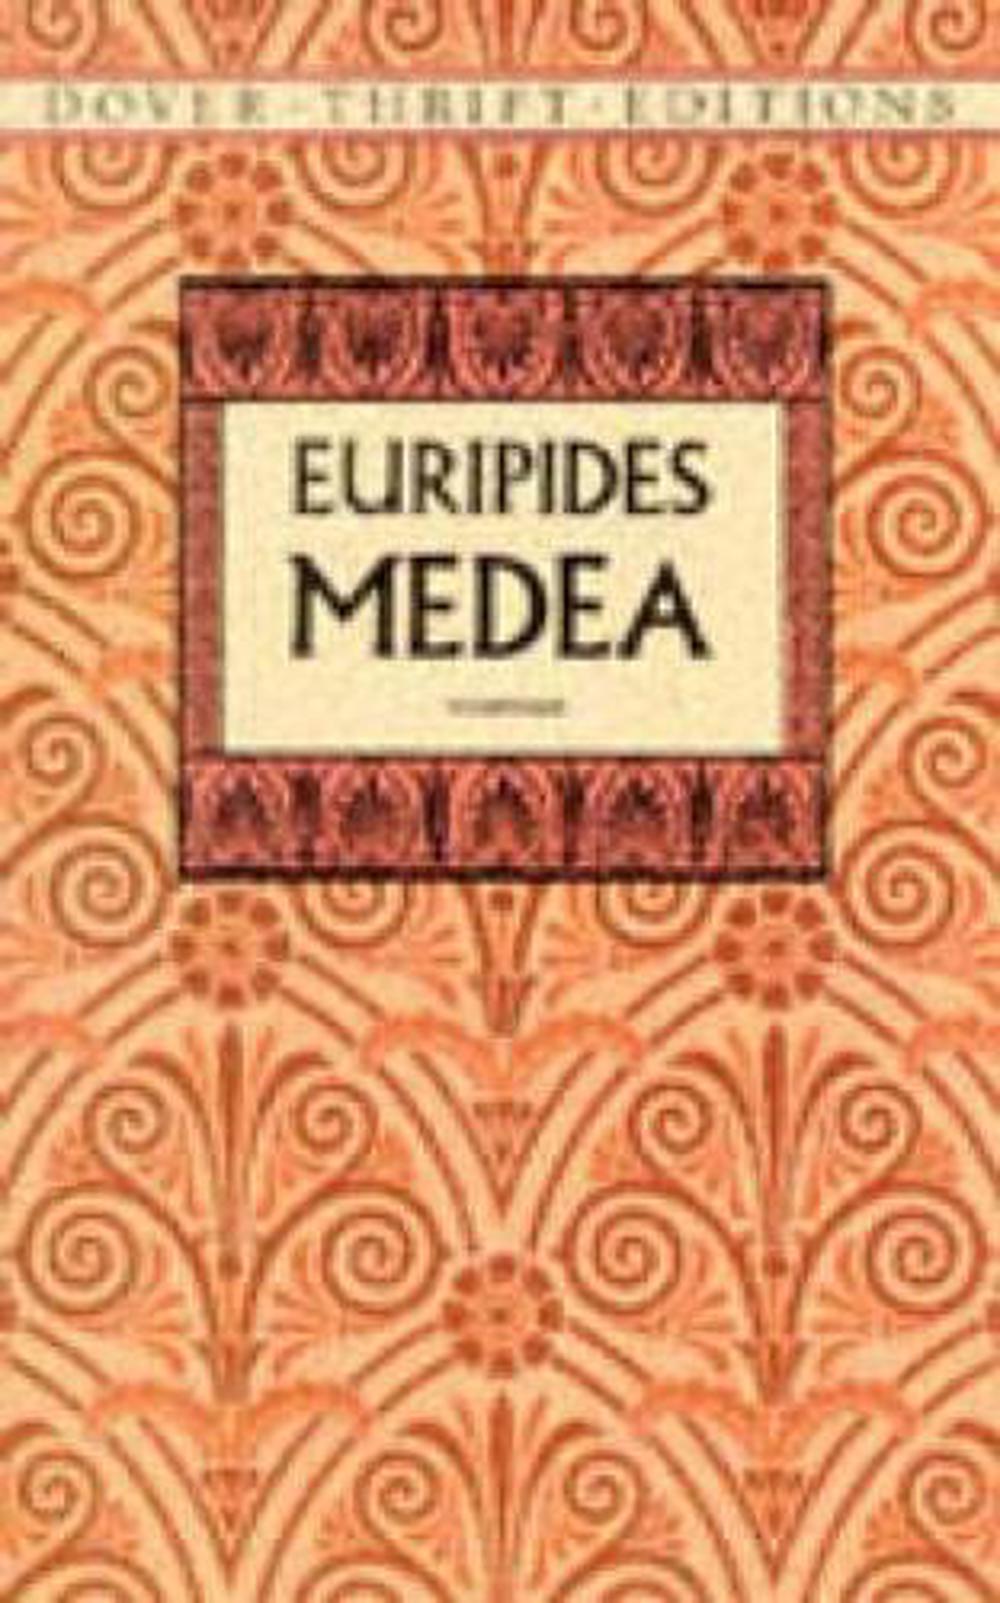 euripides medea book